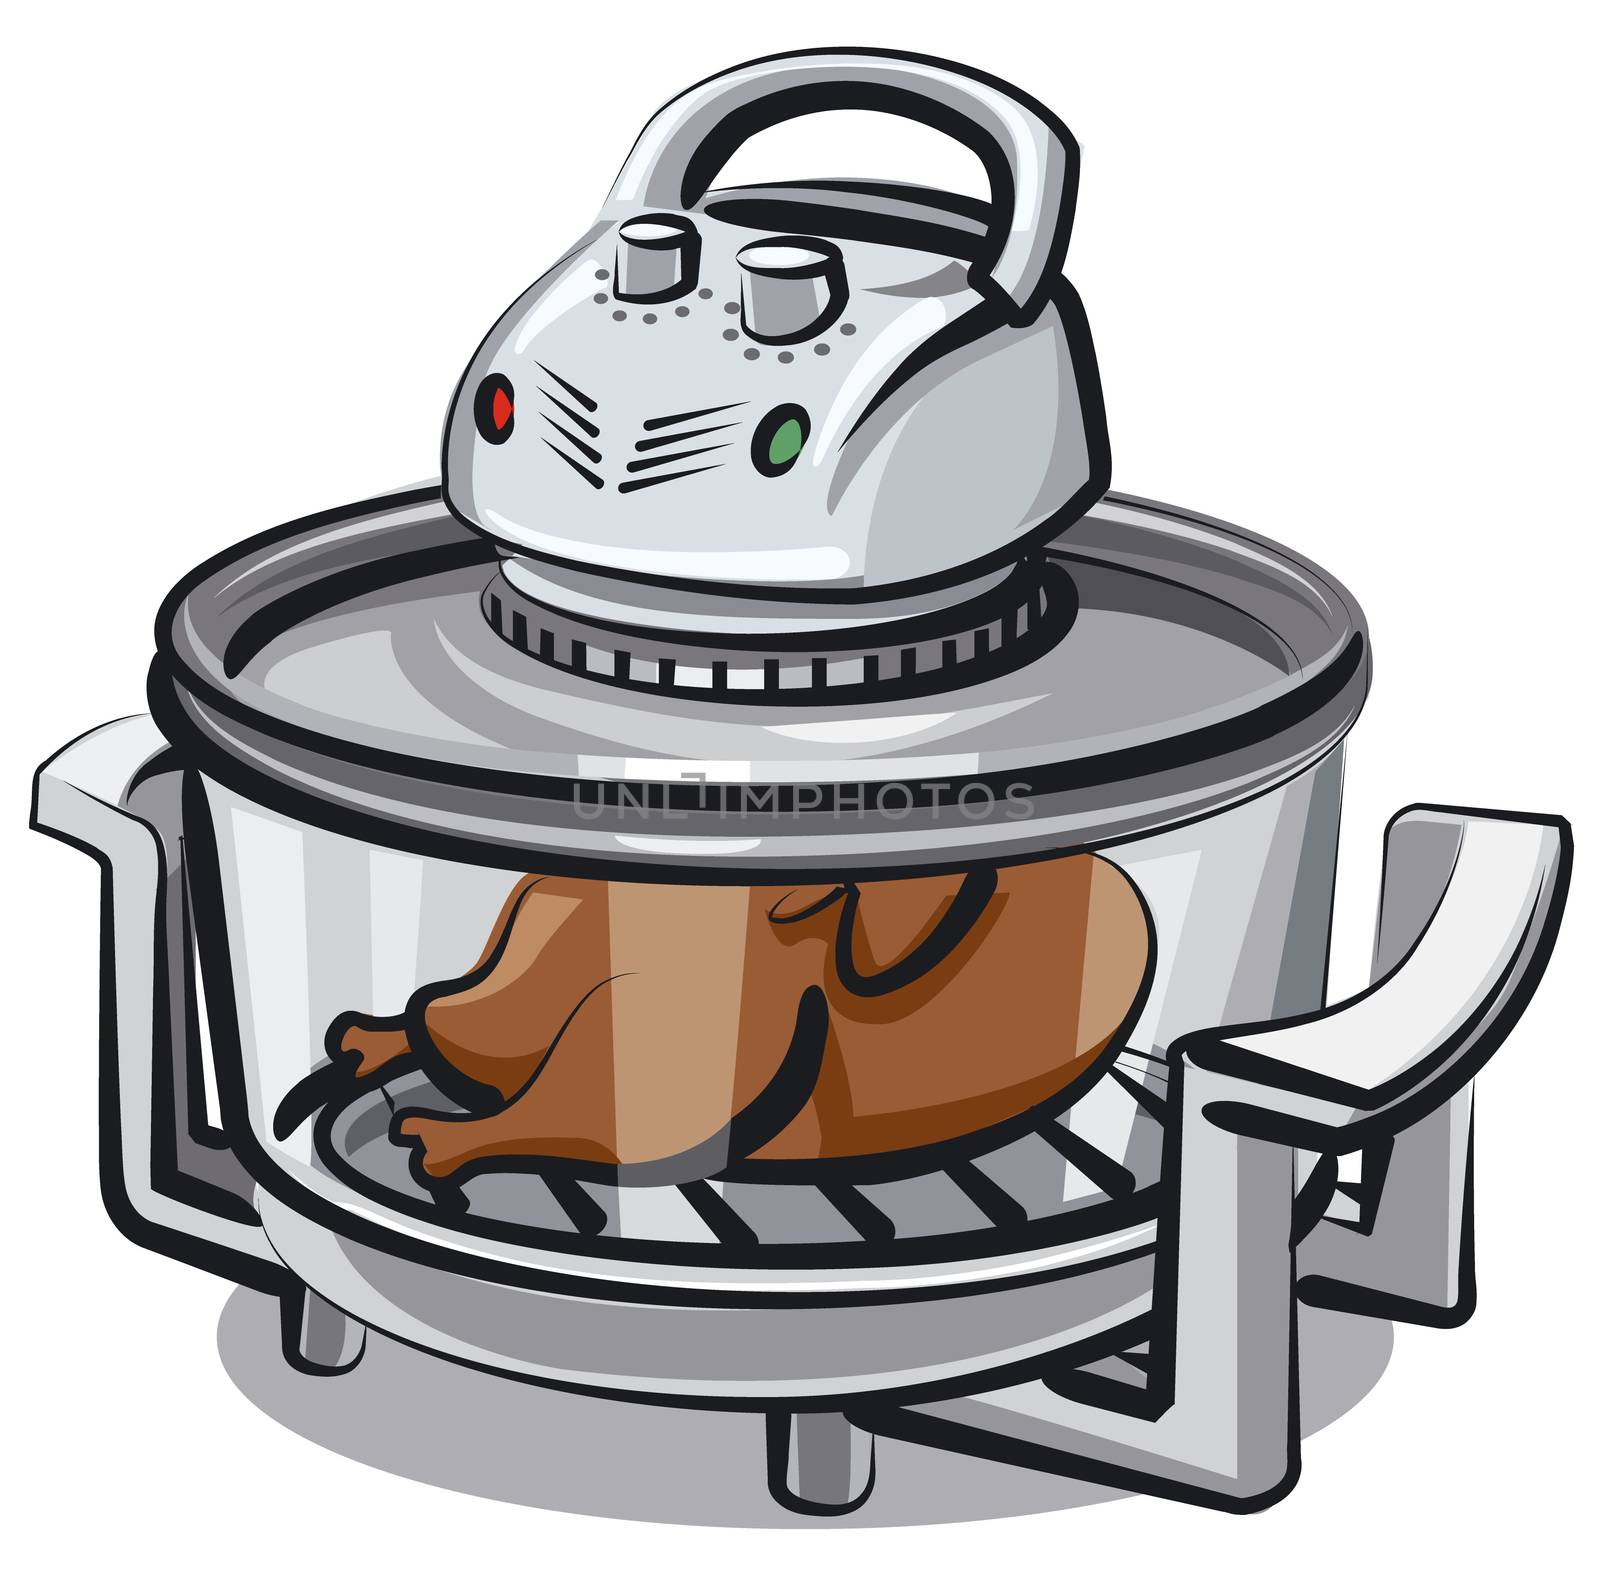 electric grill appliance by olegtoka